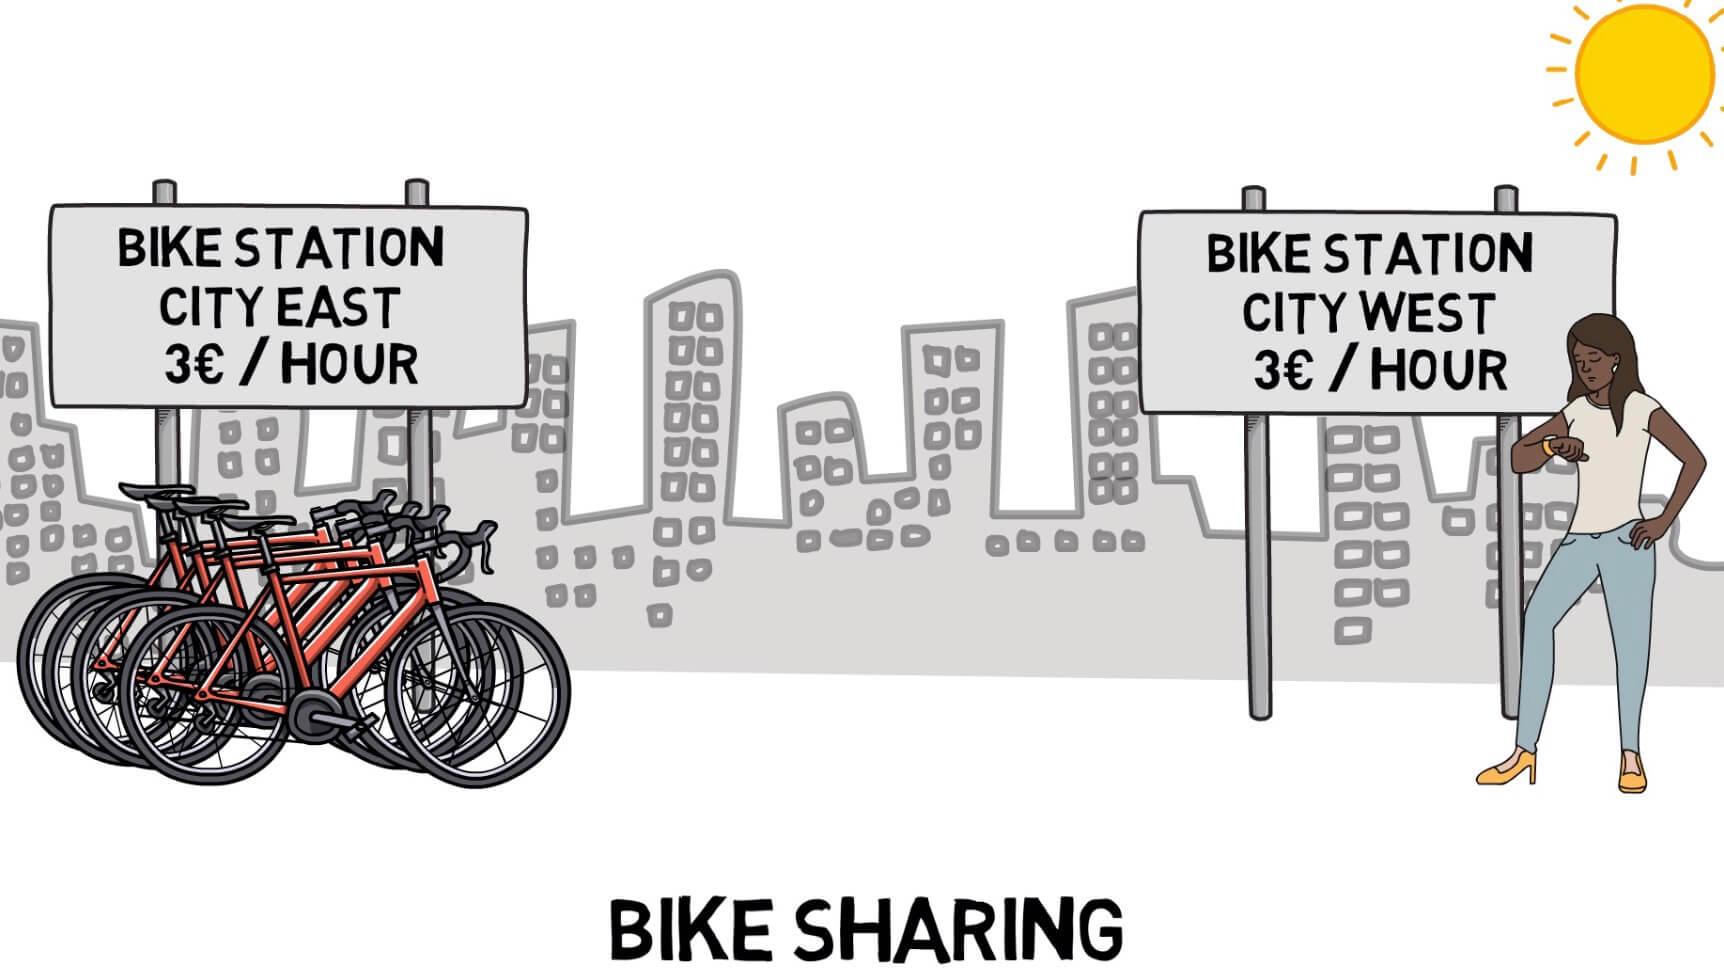 Bike sharing imbalance problem